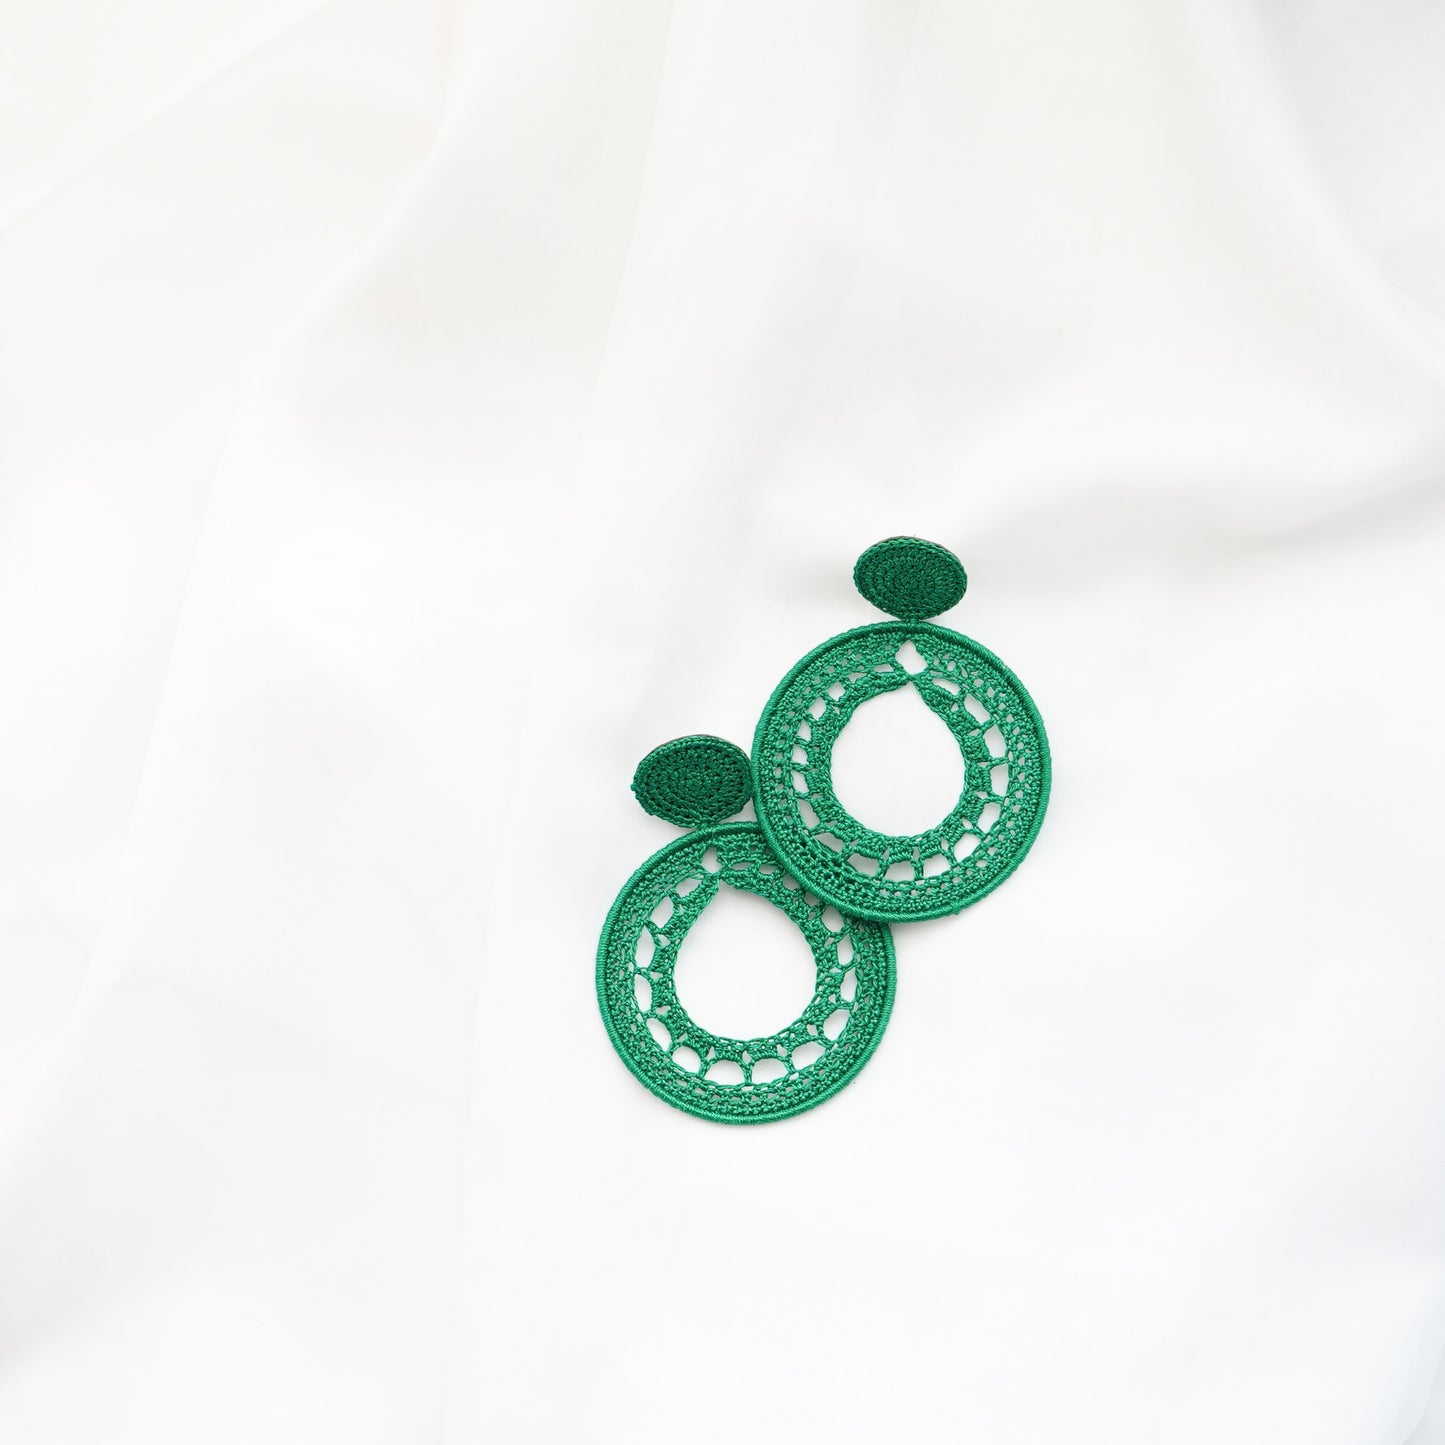 crochet-earrings-handmade-switzerland-ohrringe-schweiz-handgemacht-statement-earrings-summerearrings-emerald-colour